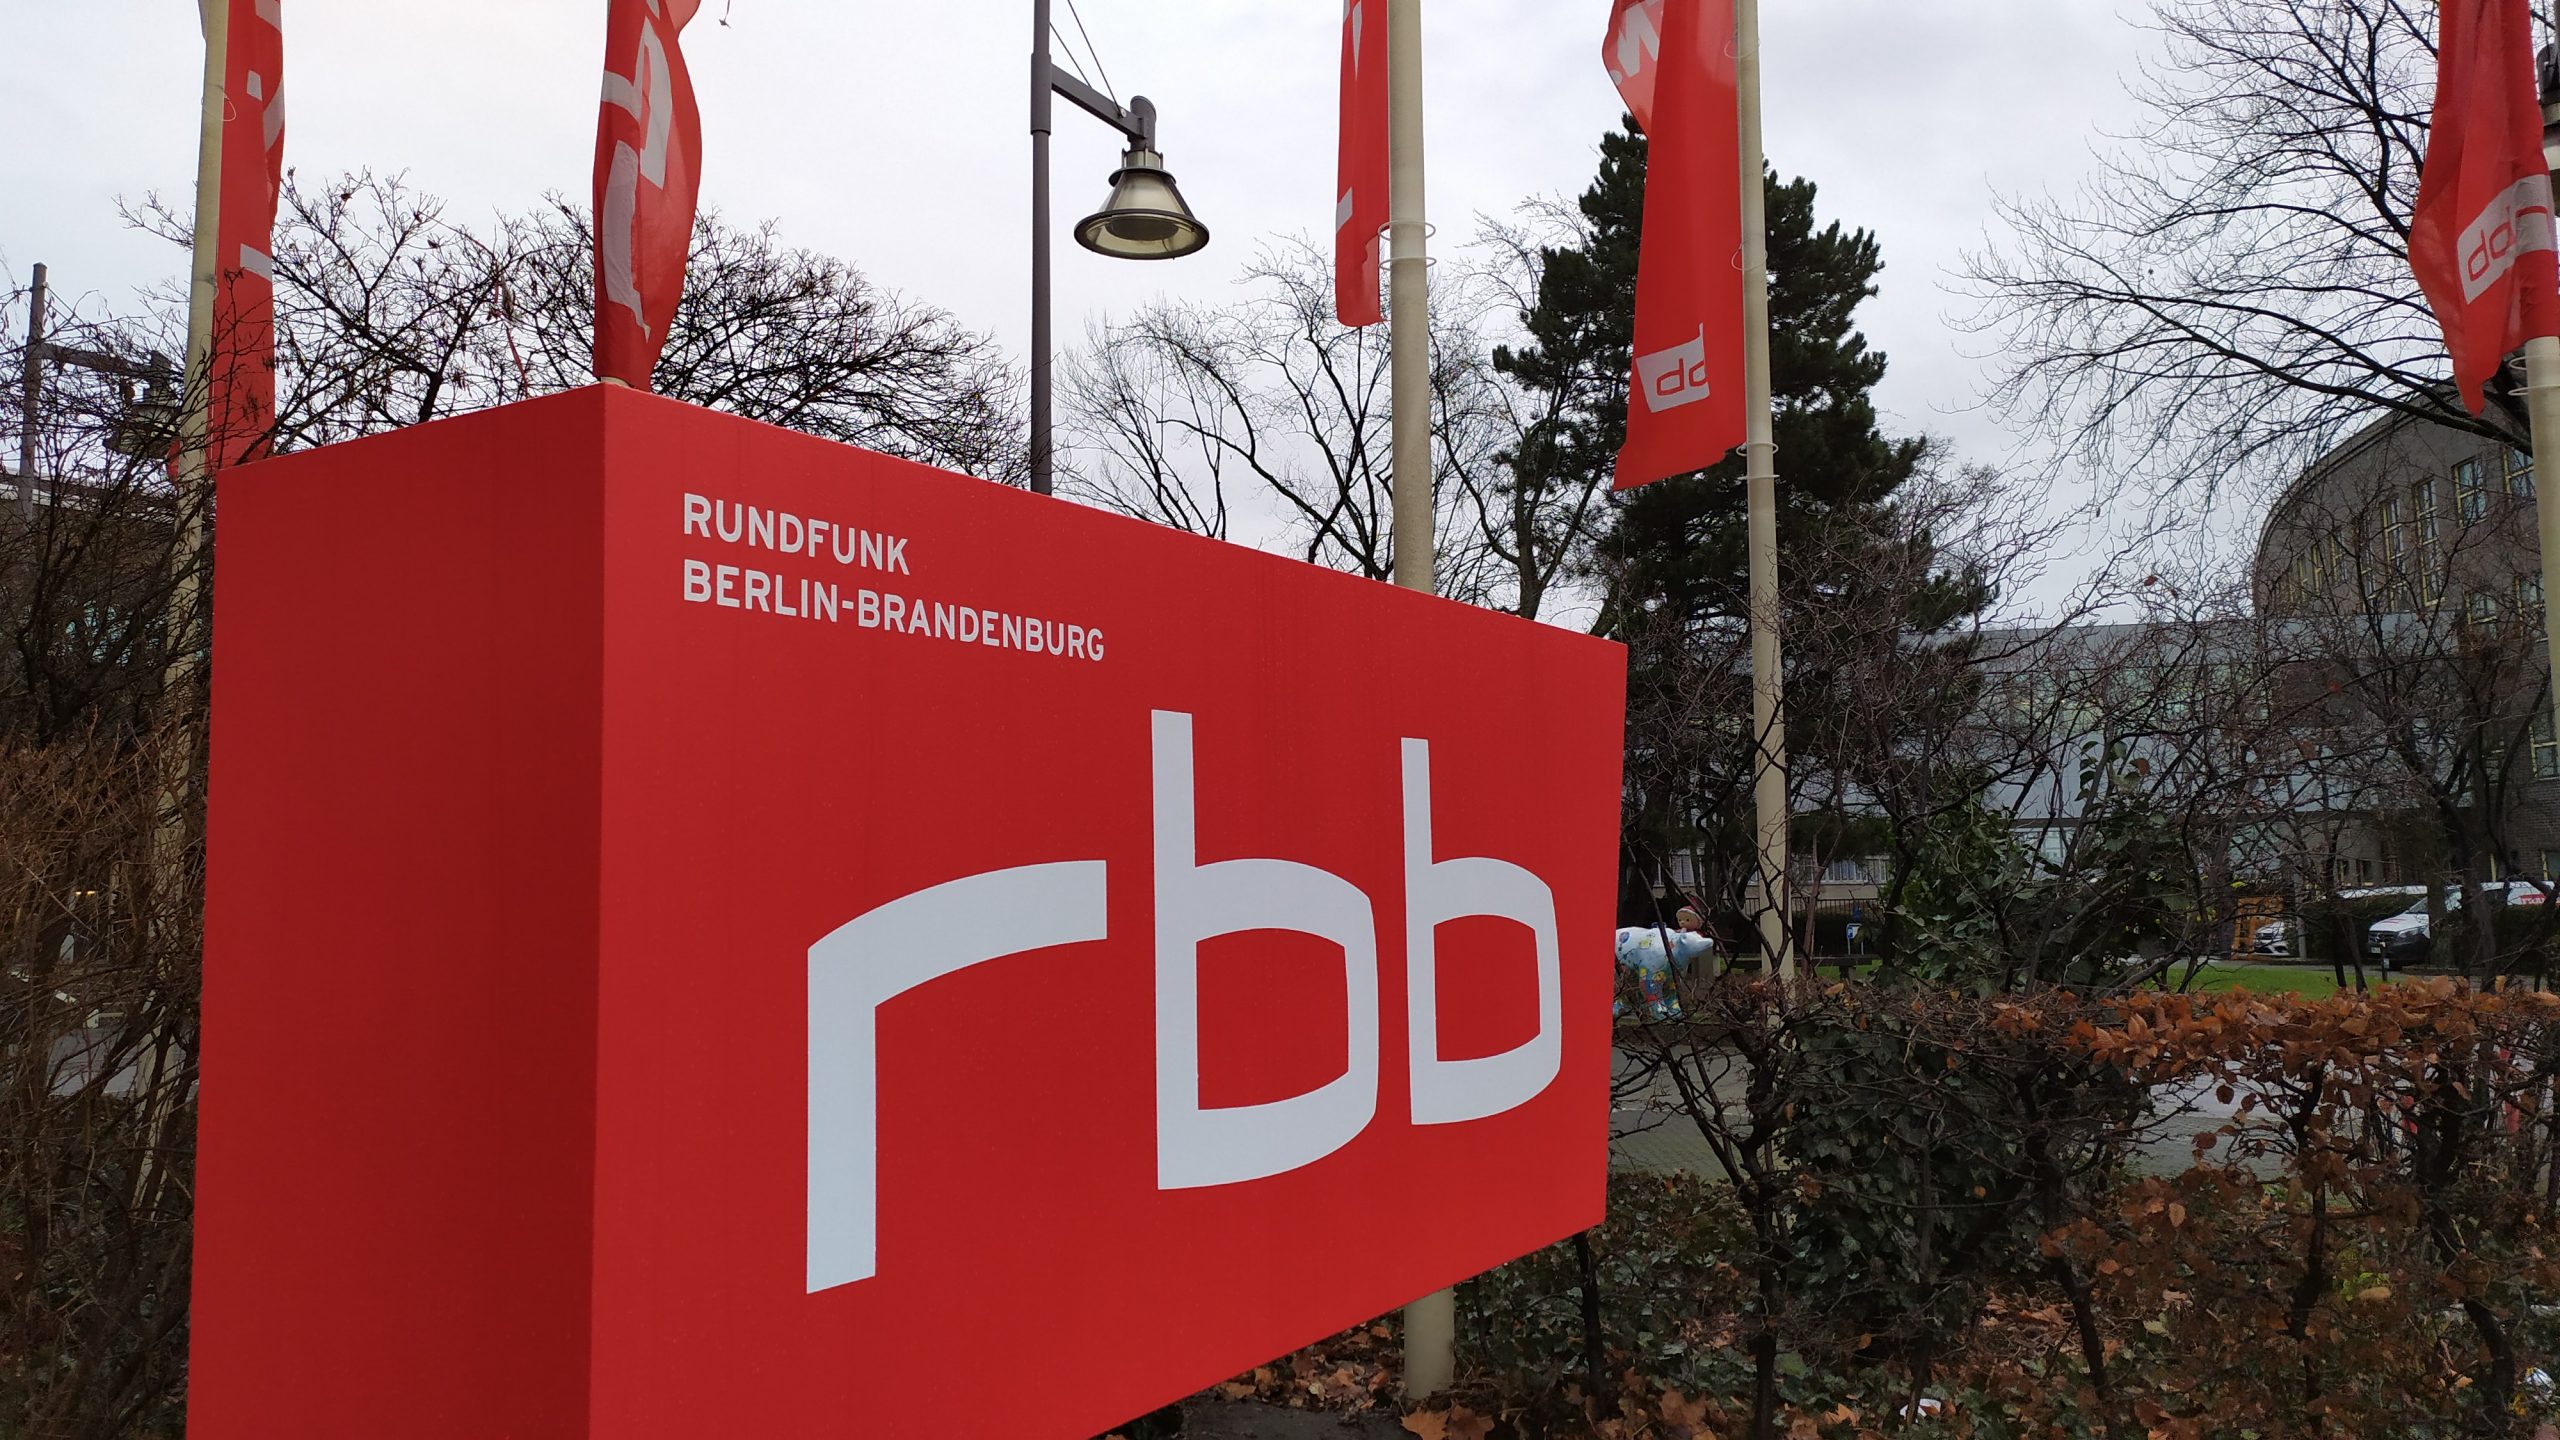 rbb headquarters in Berlin